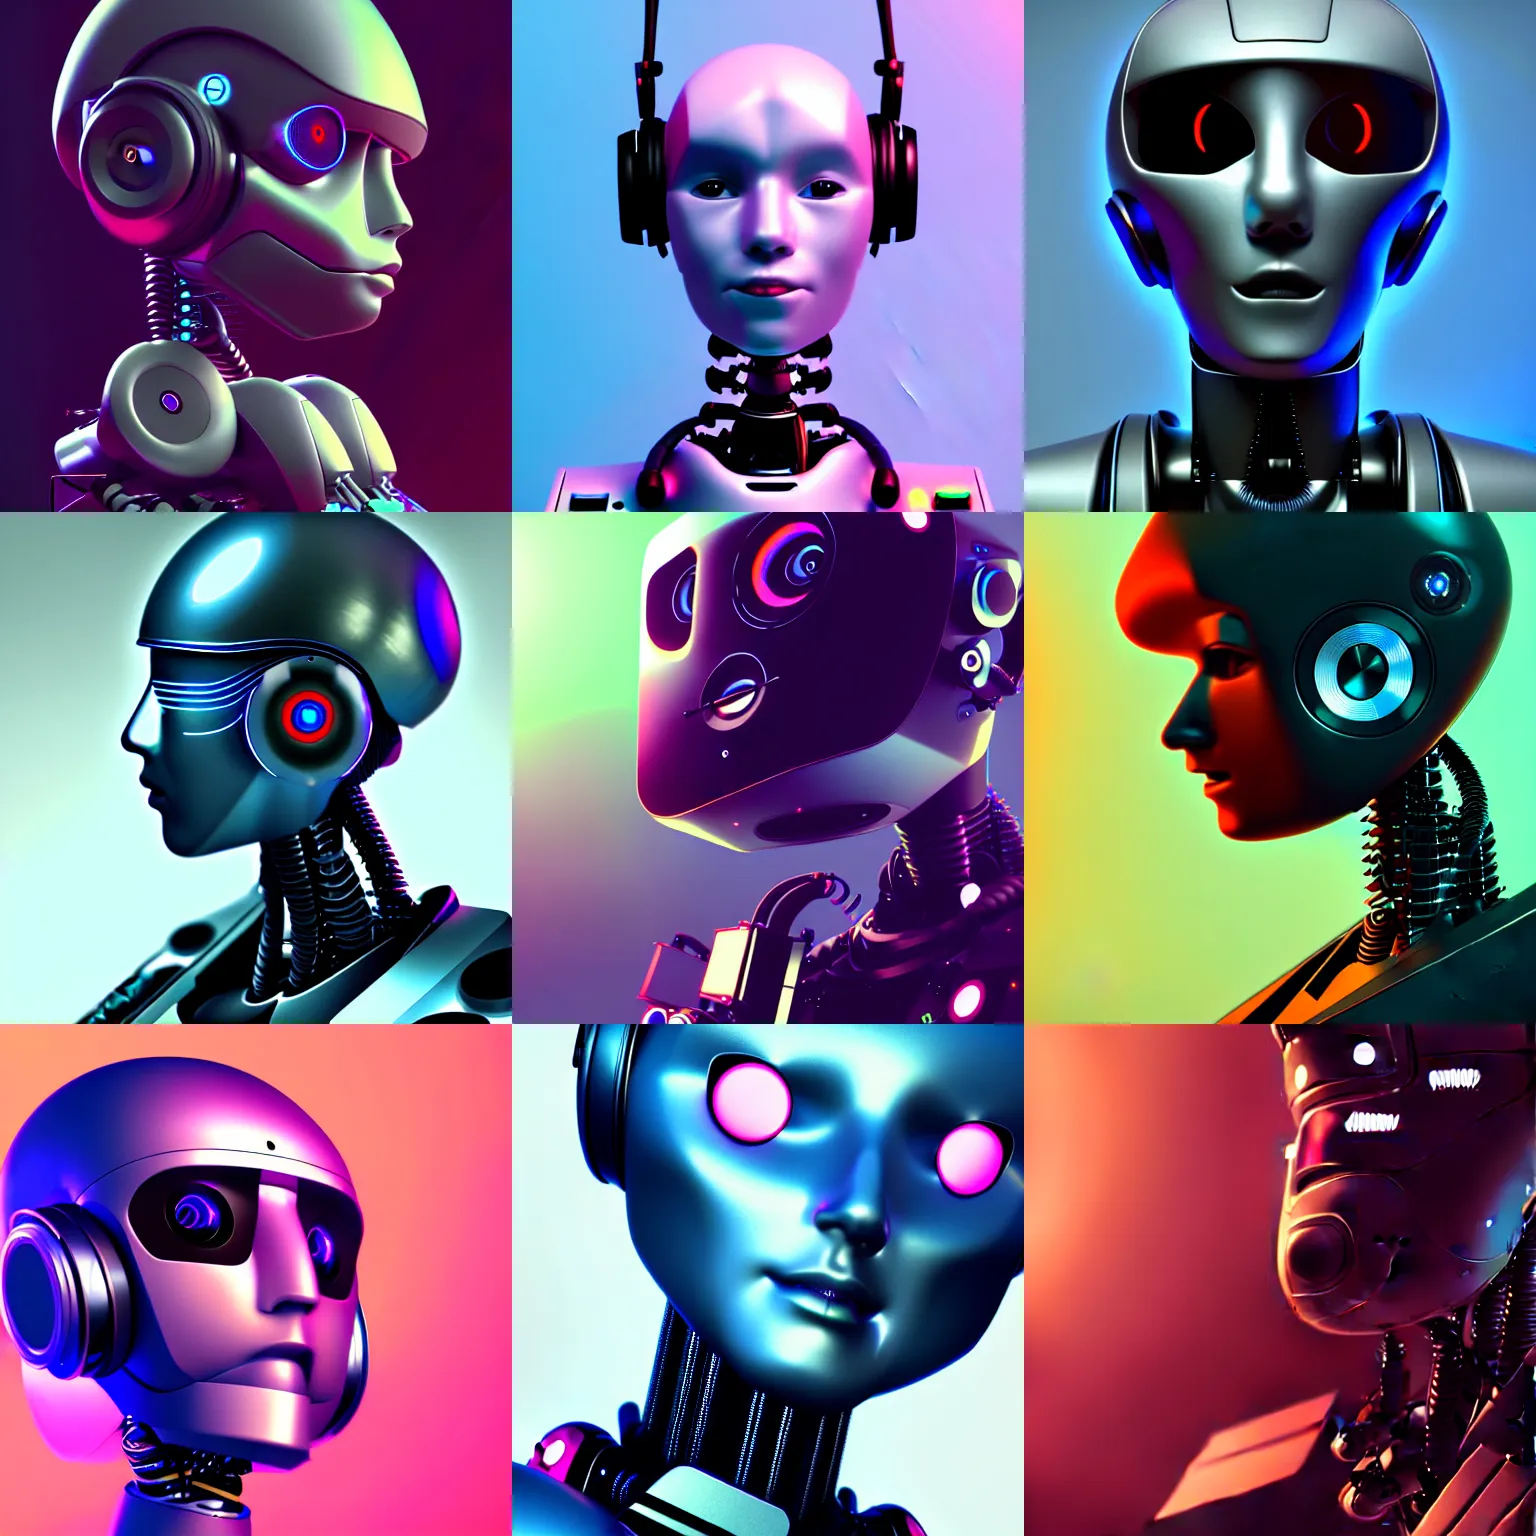 Prompt: a portrait of a robot musician using digital music equipment, digital animation, octane renderer, trending on artstation